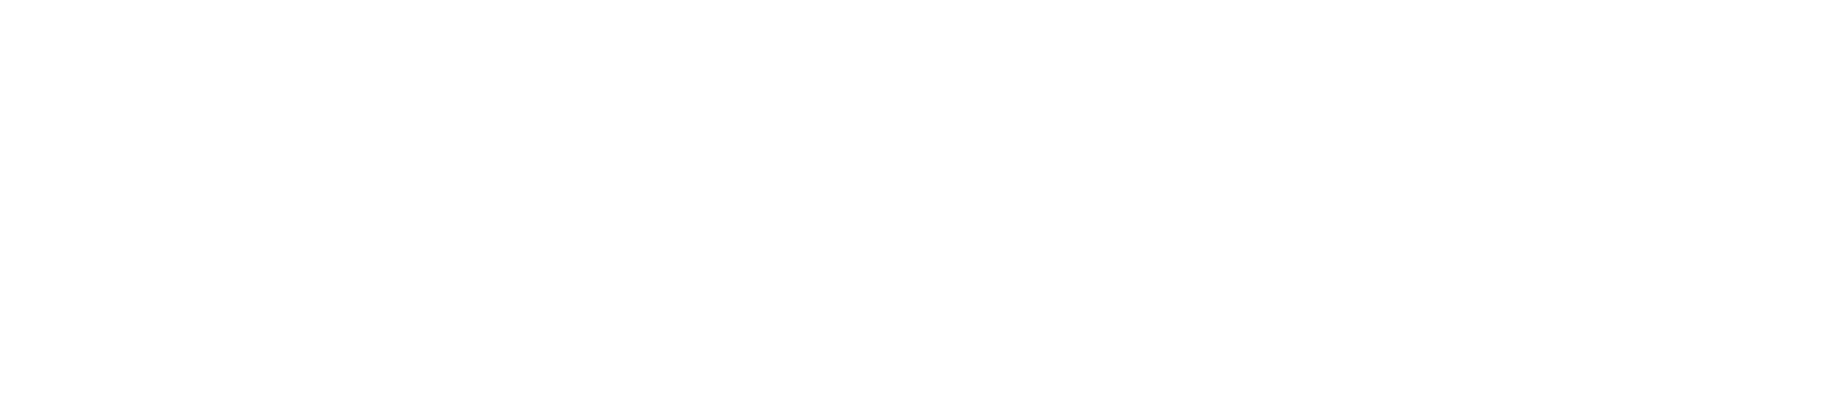 Bracalente Manufacturing Group tun 1950